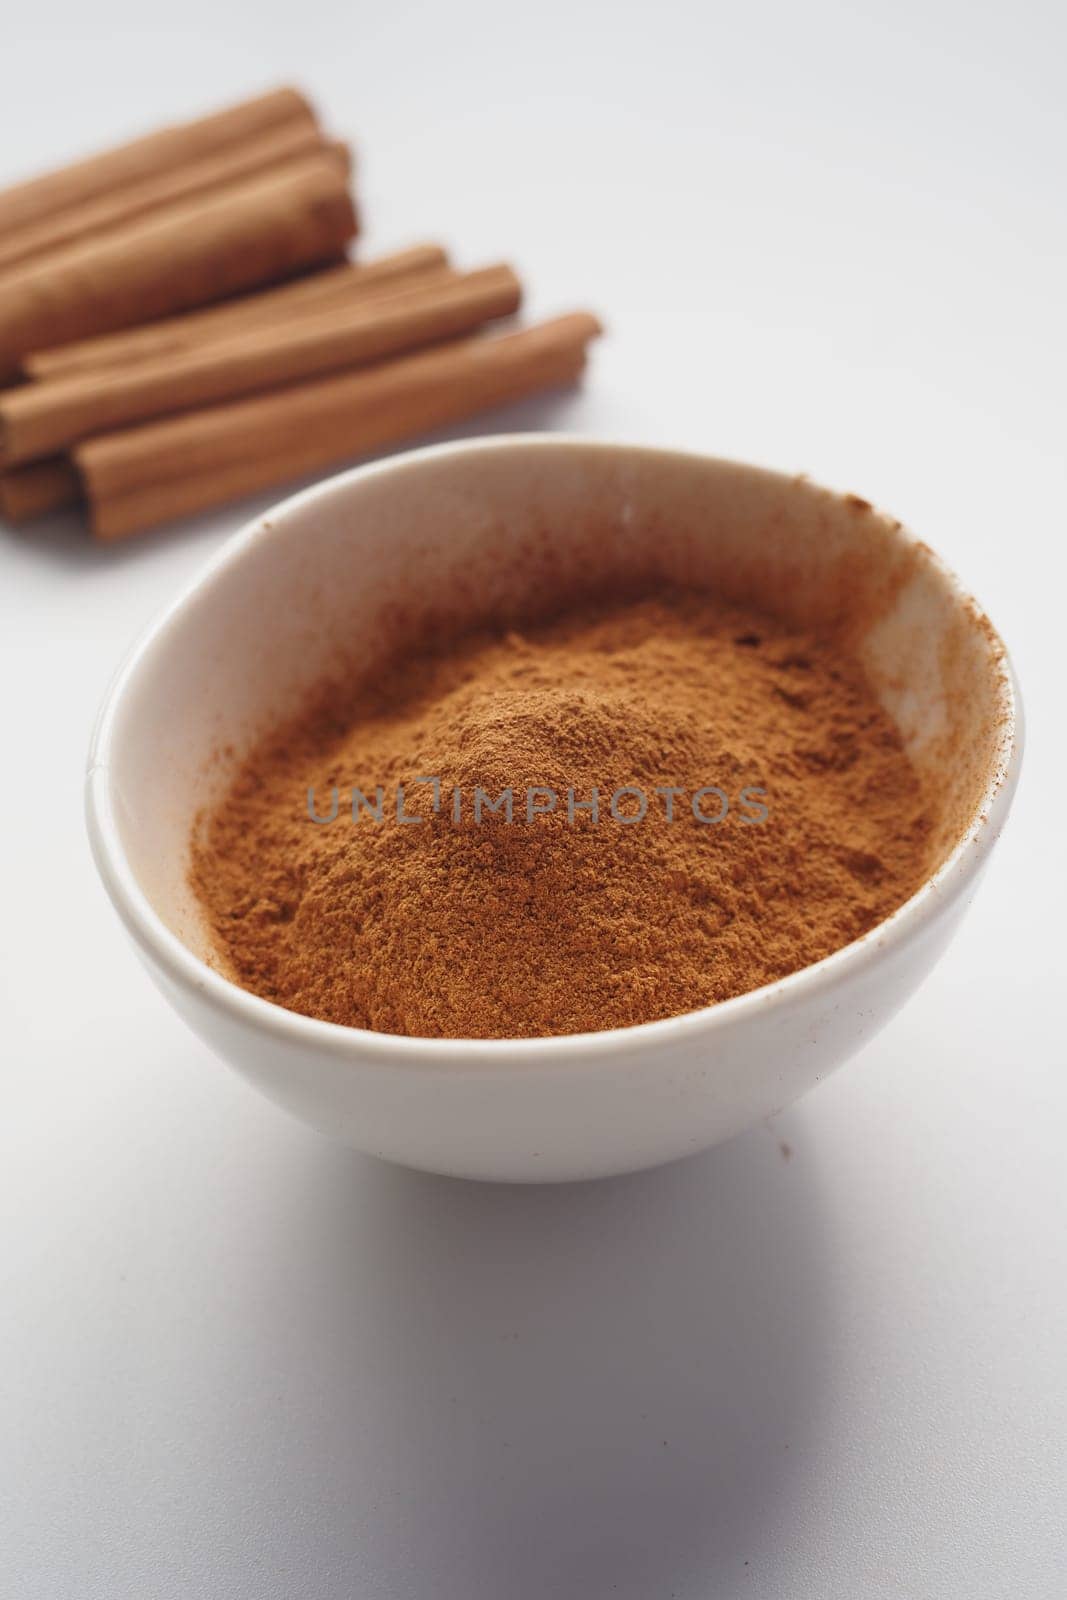 Cinnamon sticks and cinnamon powder by towfiq007